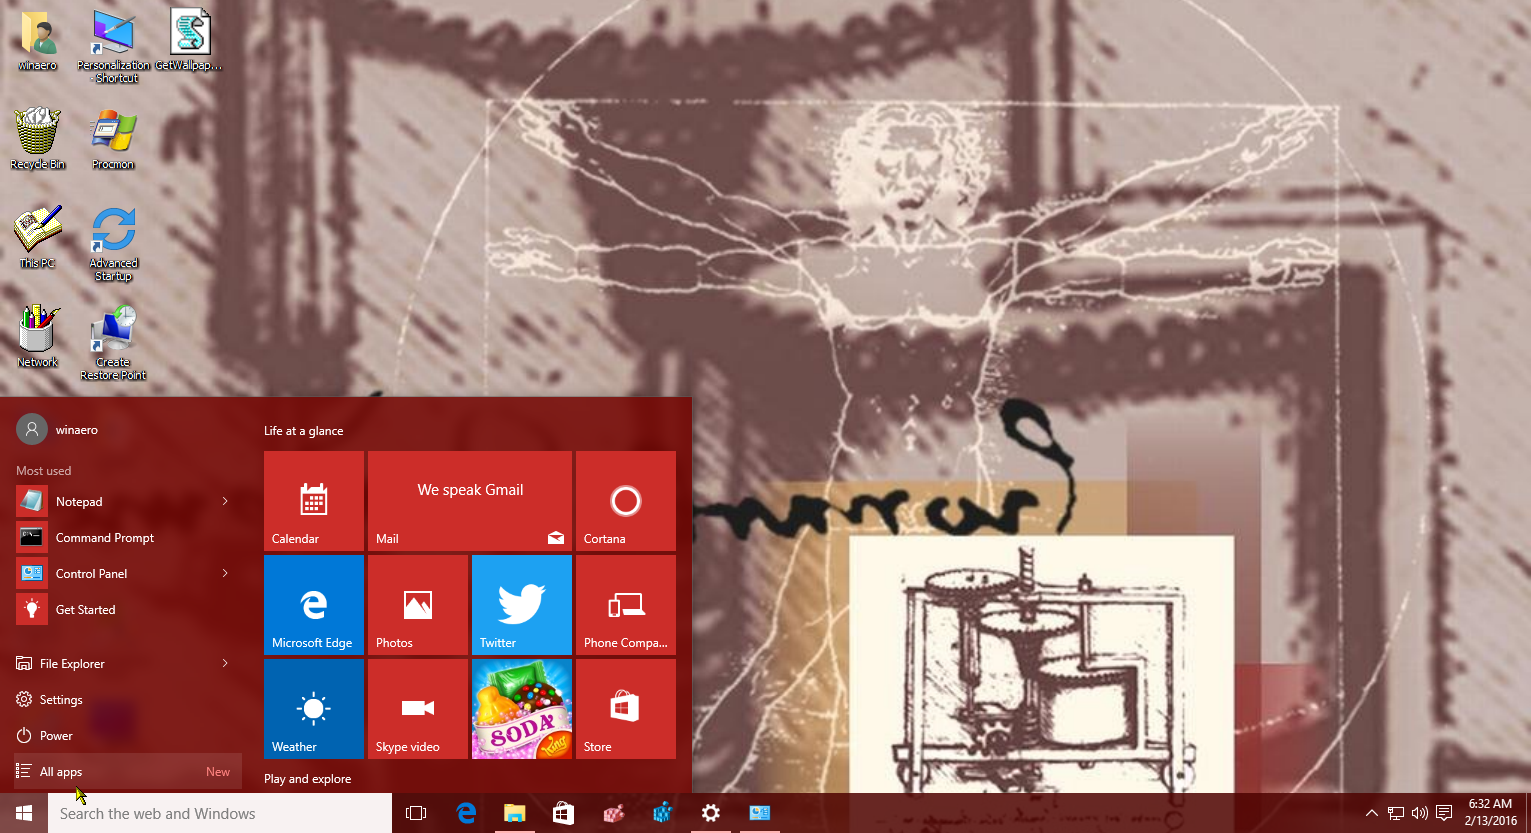 windows 98 plus screensavers